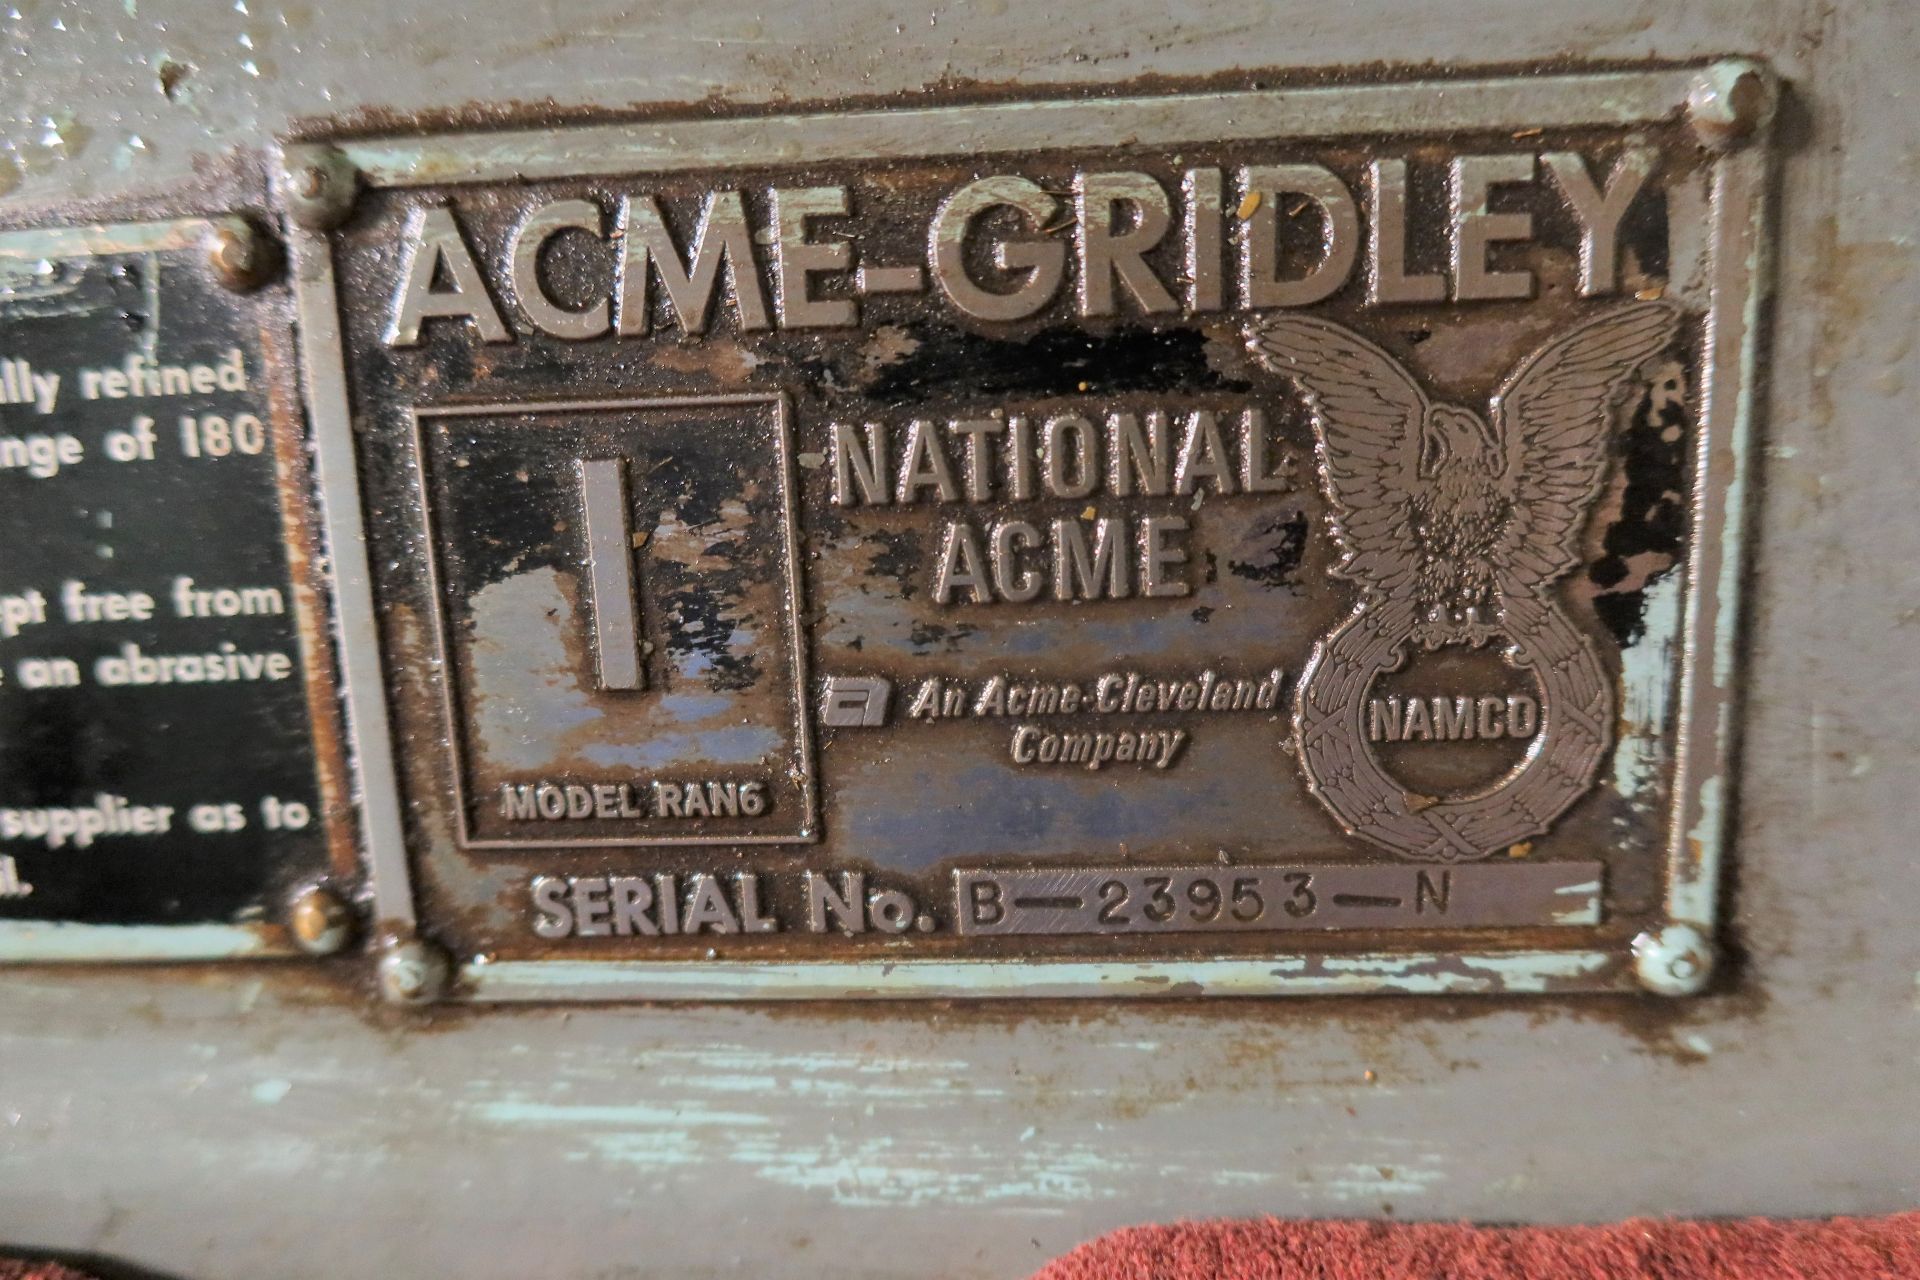 1" NATIONAL ACME RAN-6 6 SPINDLE AUTOMATIC BAR (SCREW) MACHINE, S/N B23953-N, NEW 1973 - Image 5 of 5